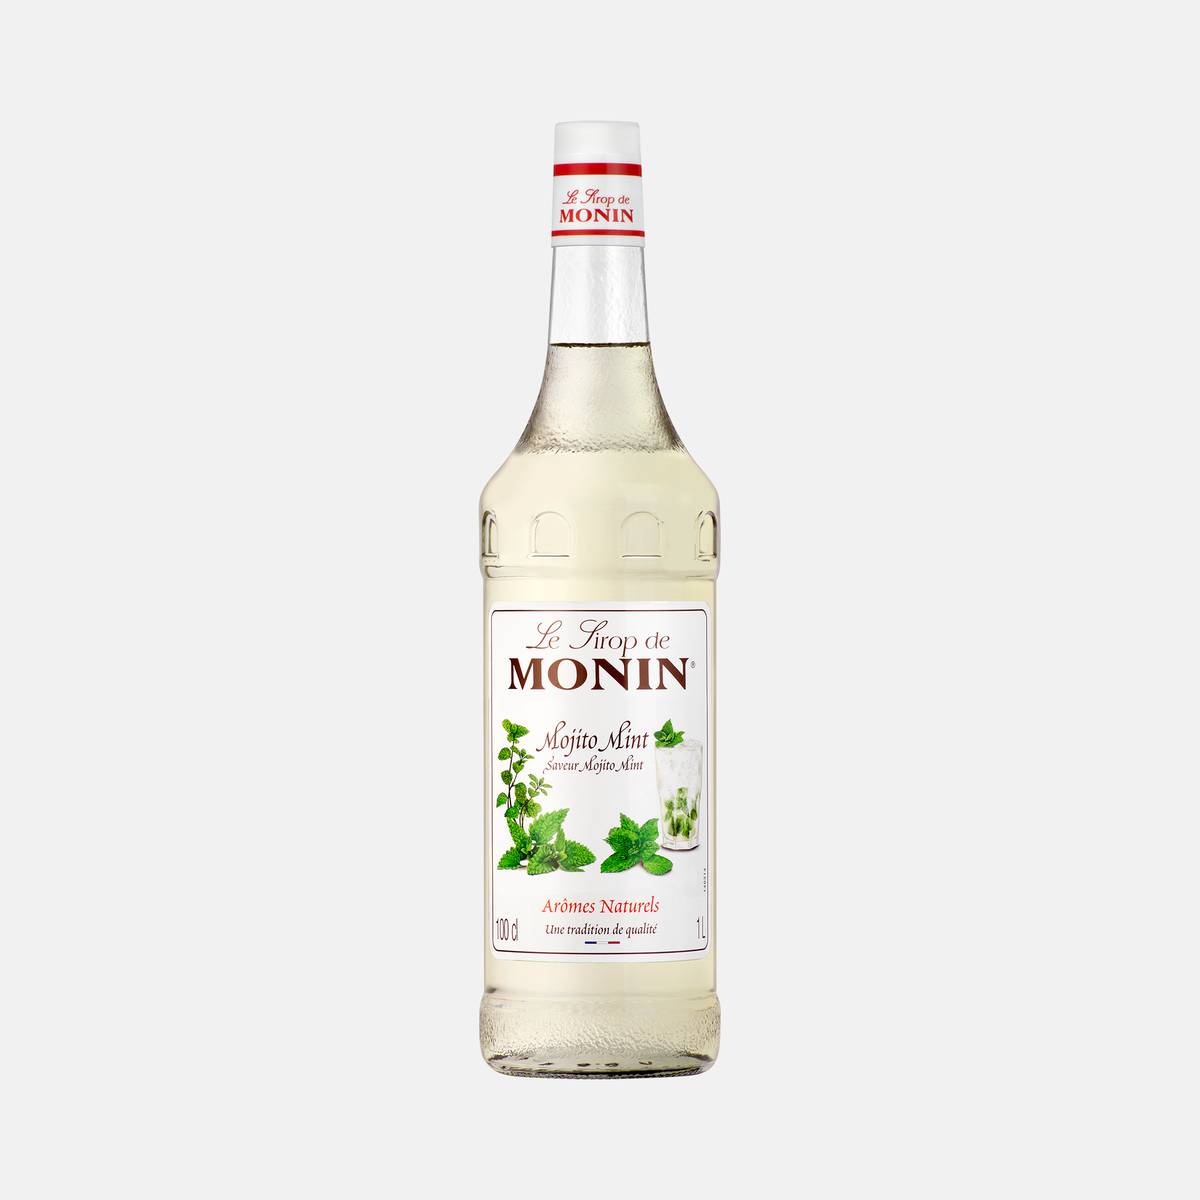 Monin Mojito Mint Syrup 1L